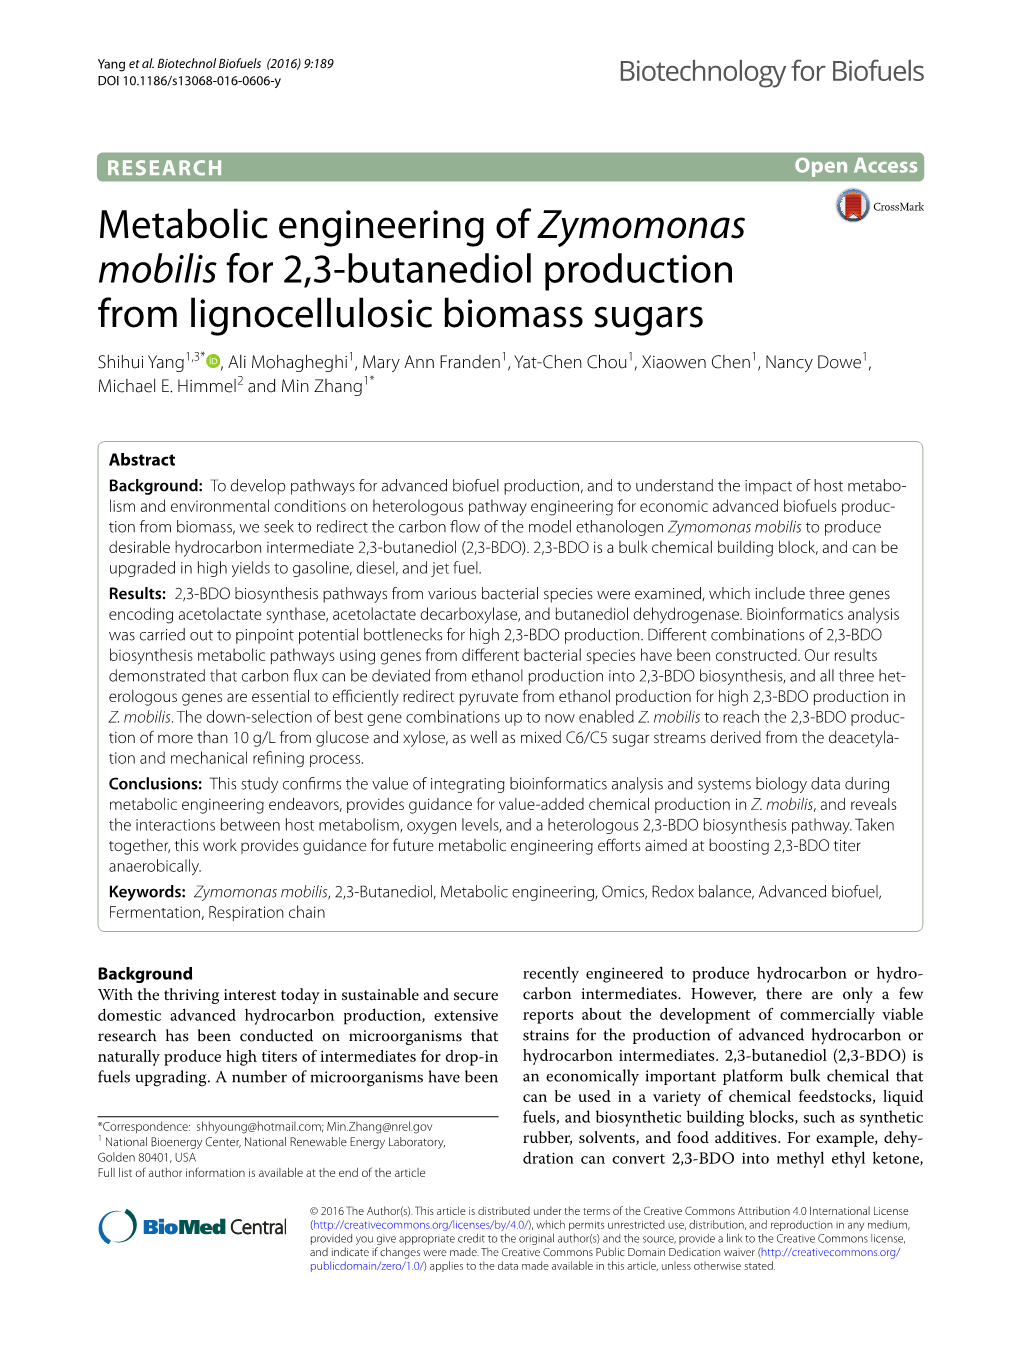 Metabolic Engineering of Zymomonas Mobilis for 2,3-Butanediol